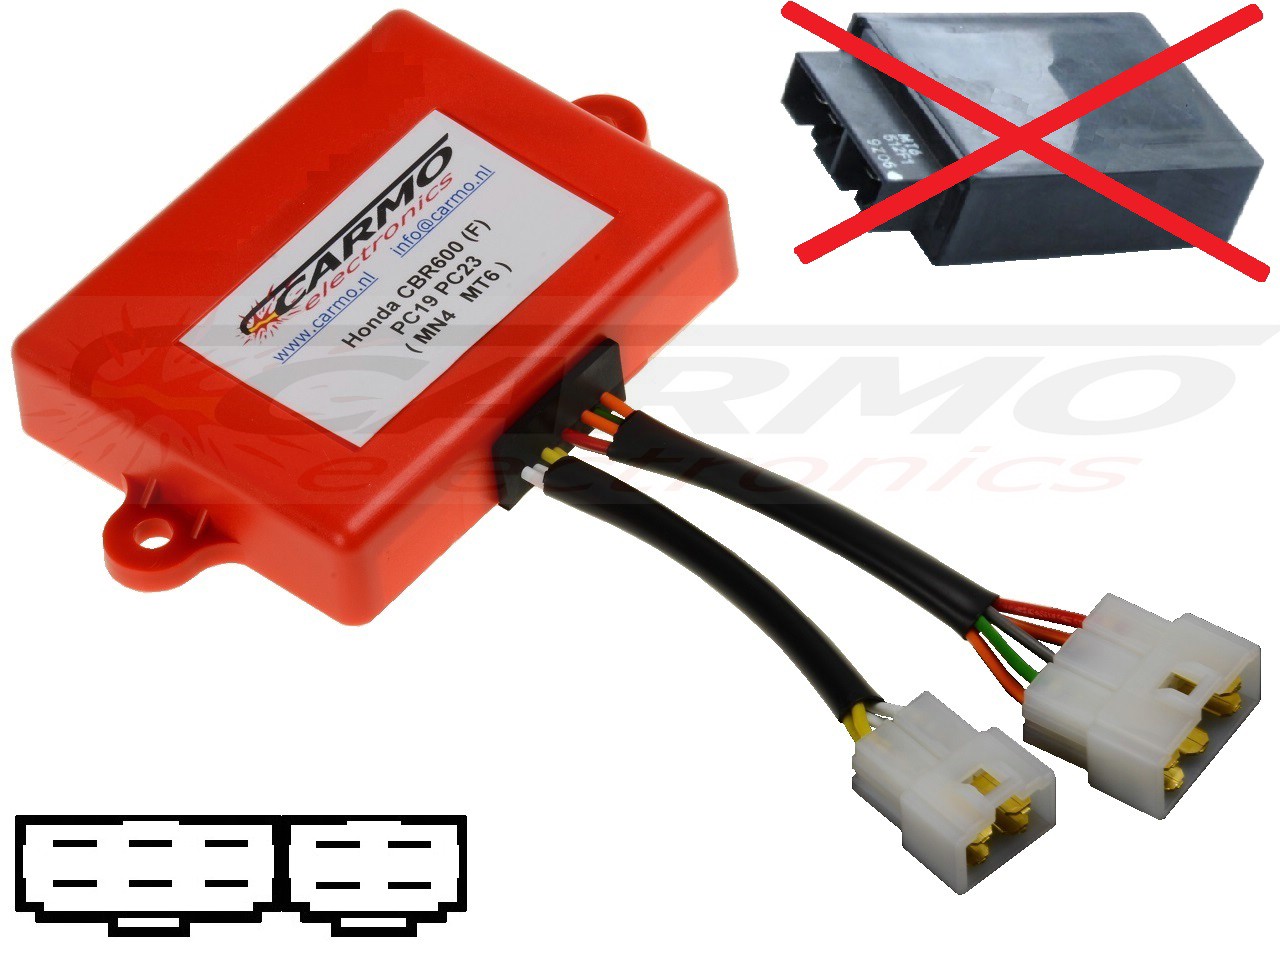 Honda CBR600 igniter ignition module CDI TCI Box (MN4, MT6) - Clique na Imagem para Fechar